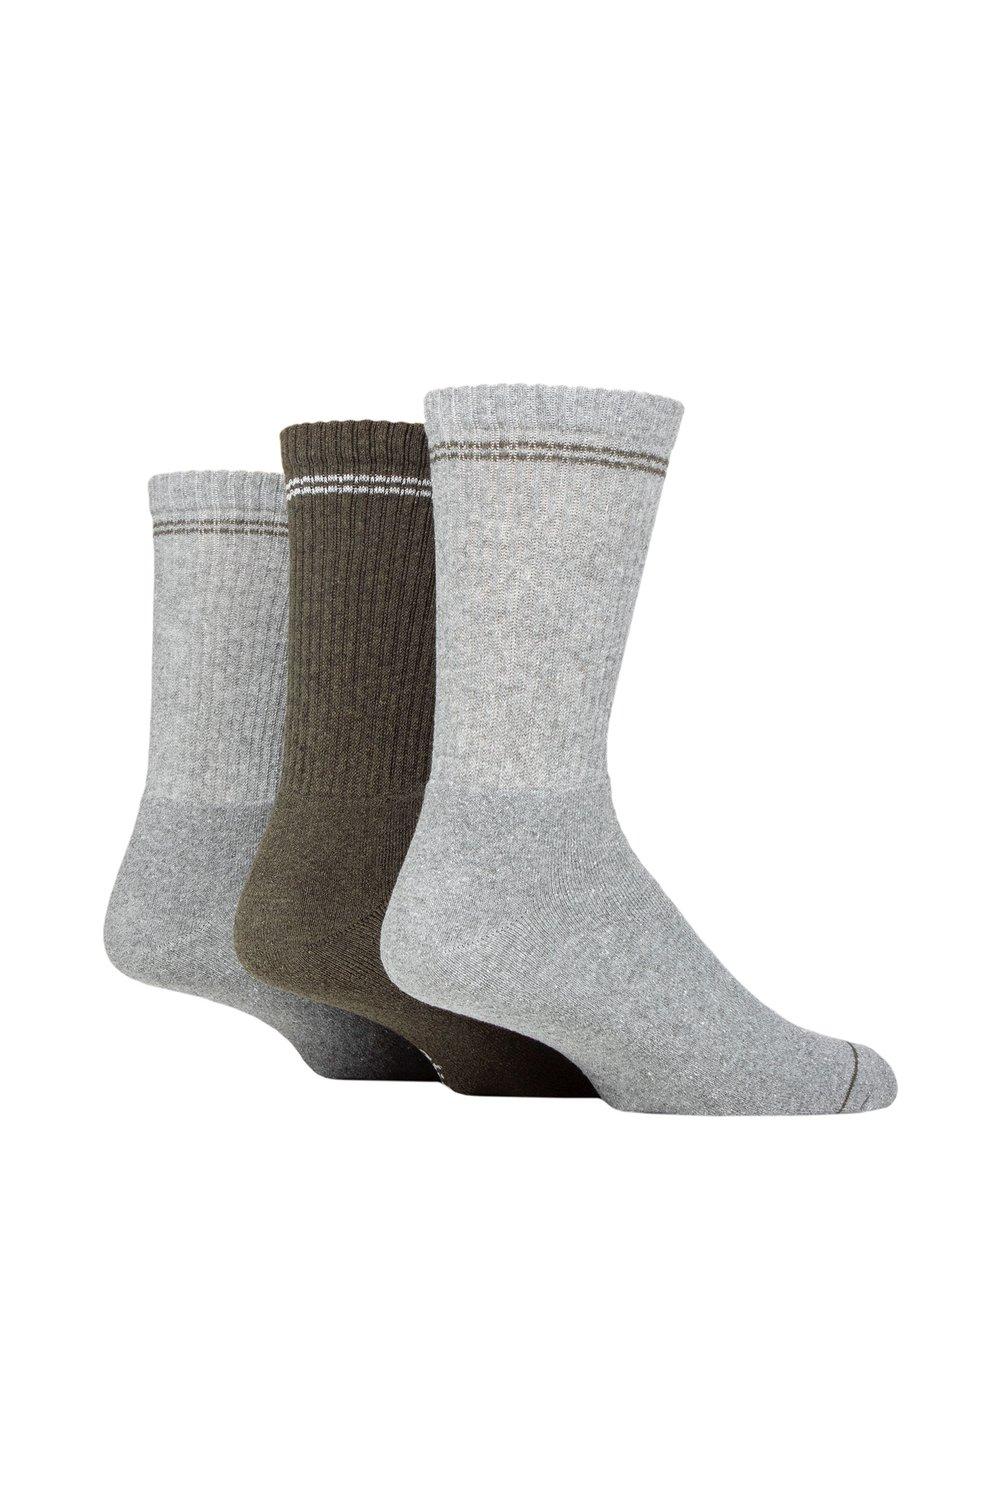 3 Pair 100% Recycled Fashion Cotton Sports Socks